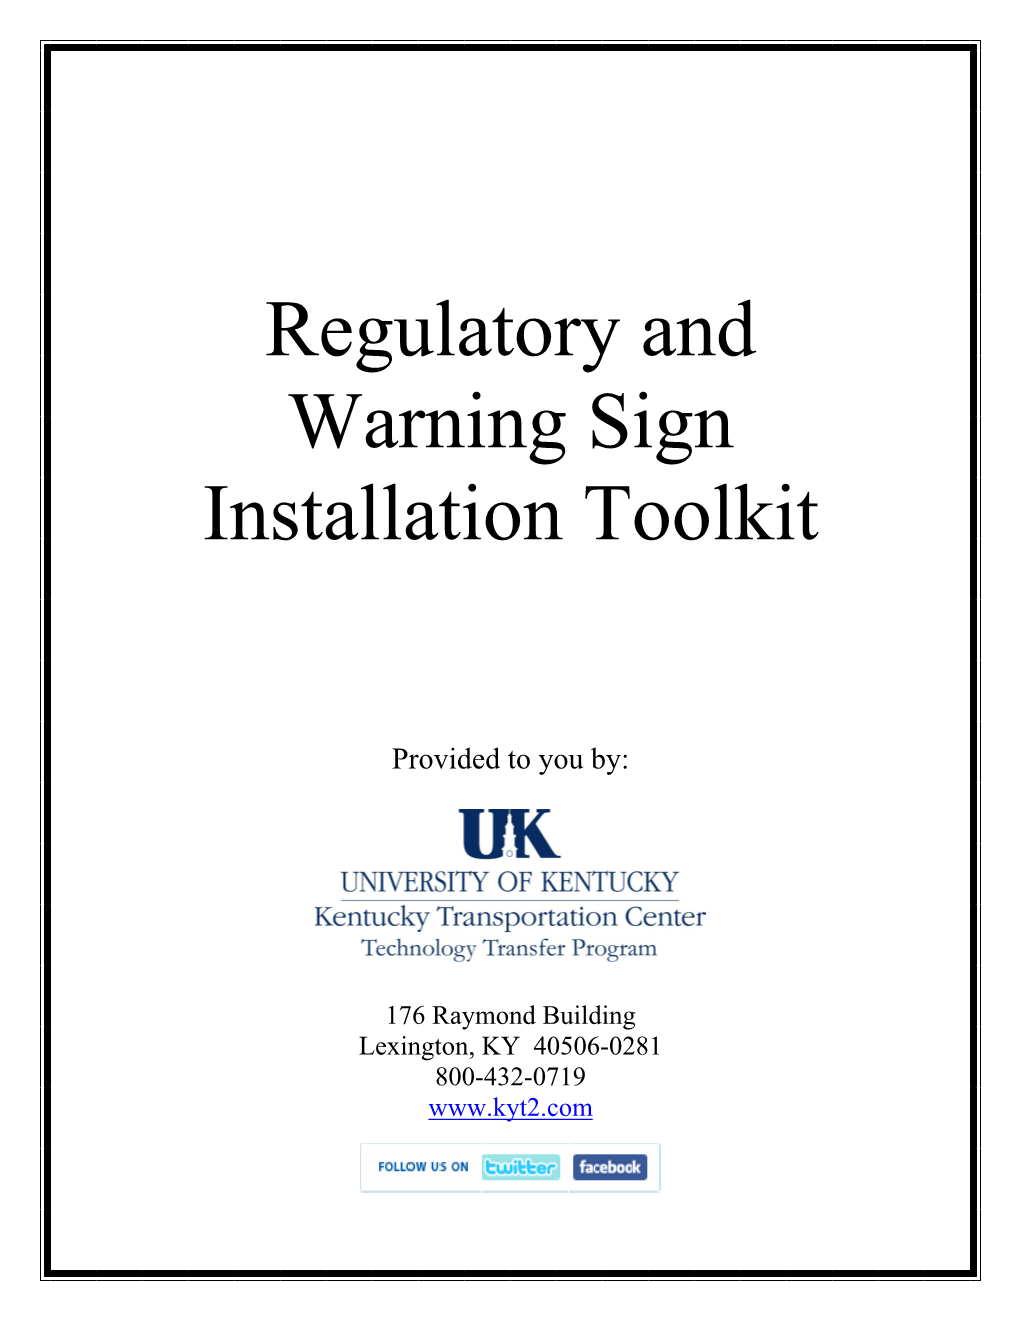 Regulatory and Warning Sign Installation Toolkit